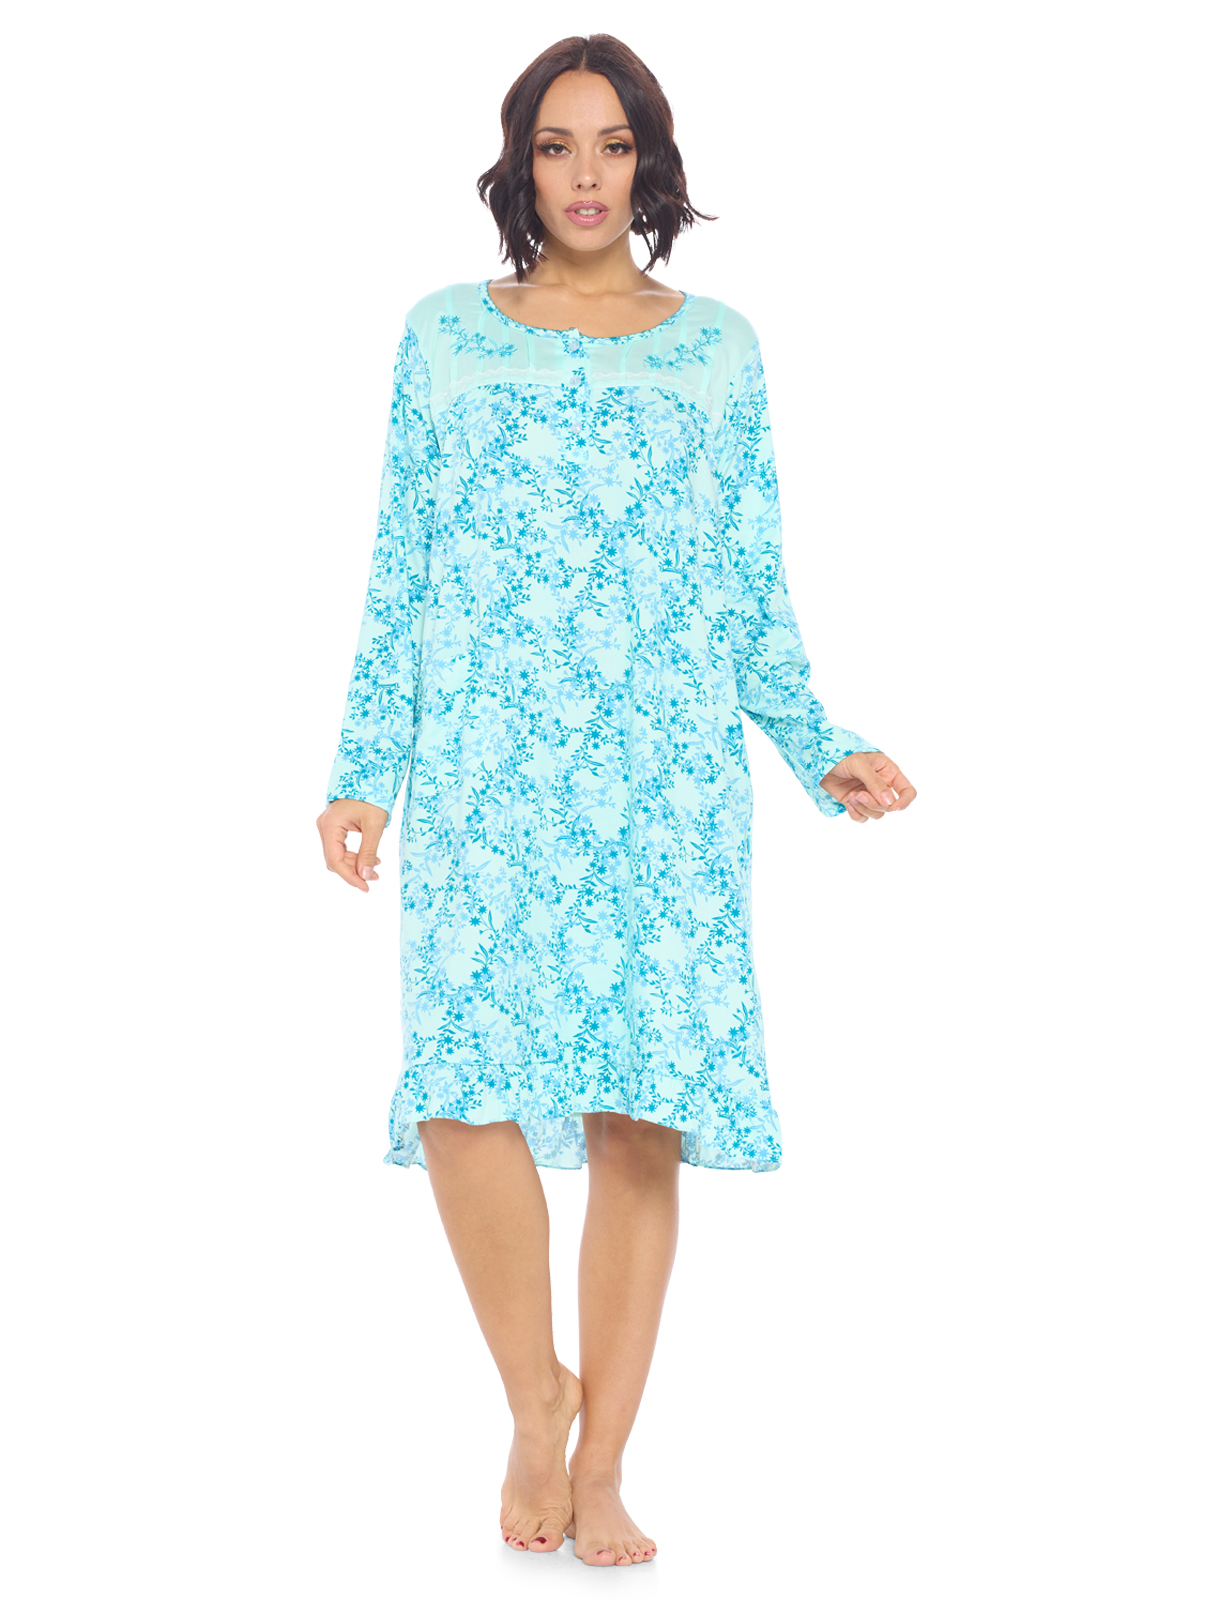 Casual Nights Women's Printed Long Sleeve Nightgown - Aqua LA6013AQ